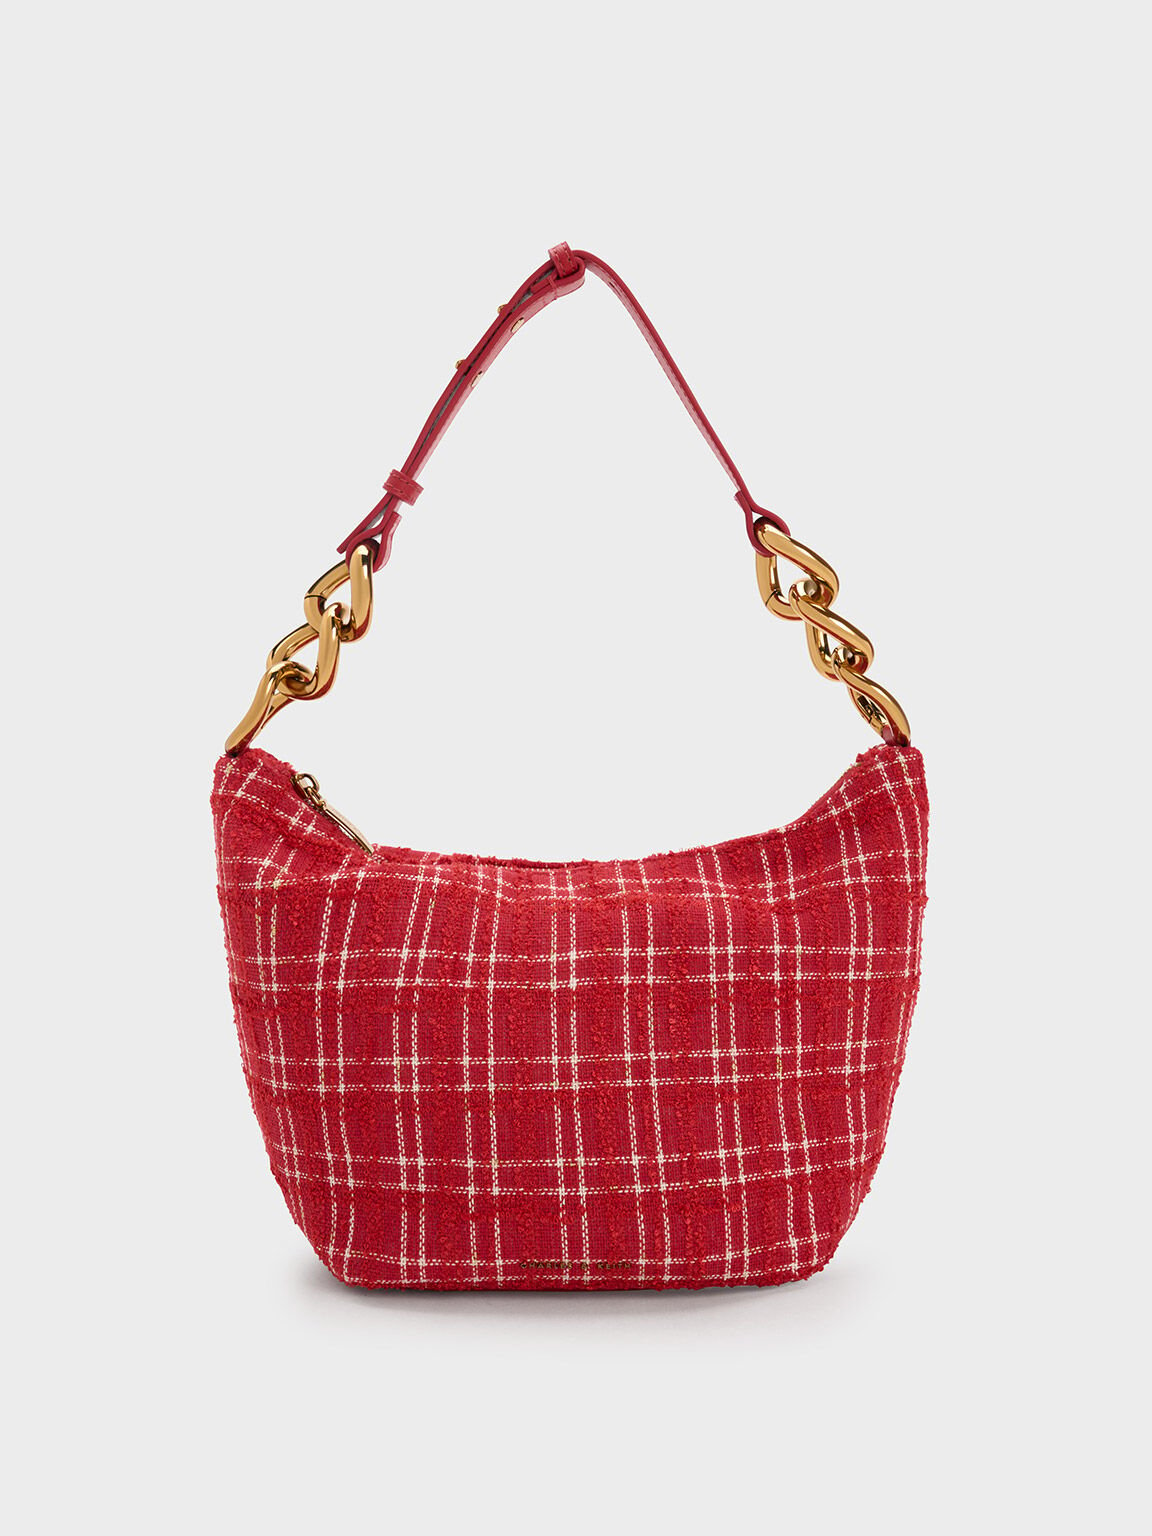 Patricia Nash Red Hobo Bags for Women | Mercari